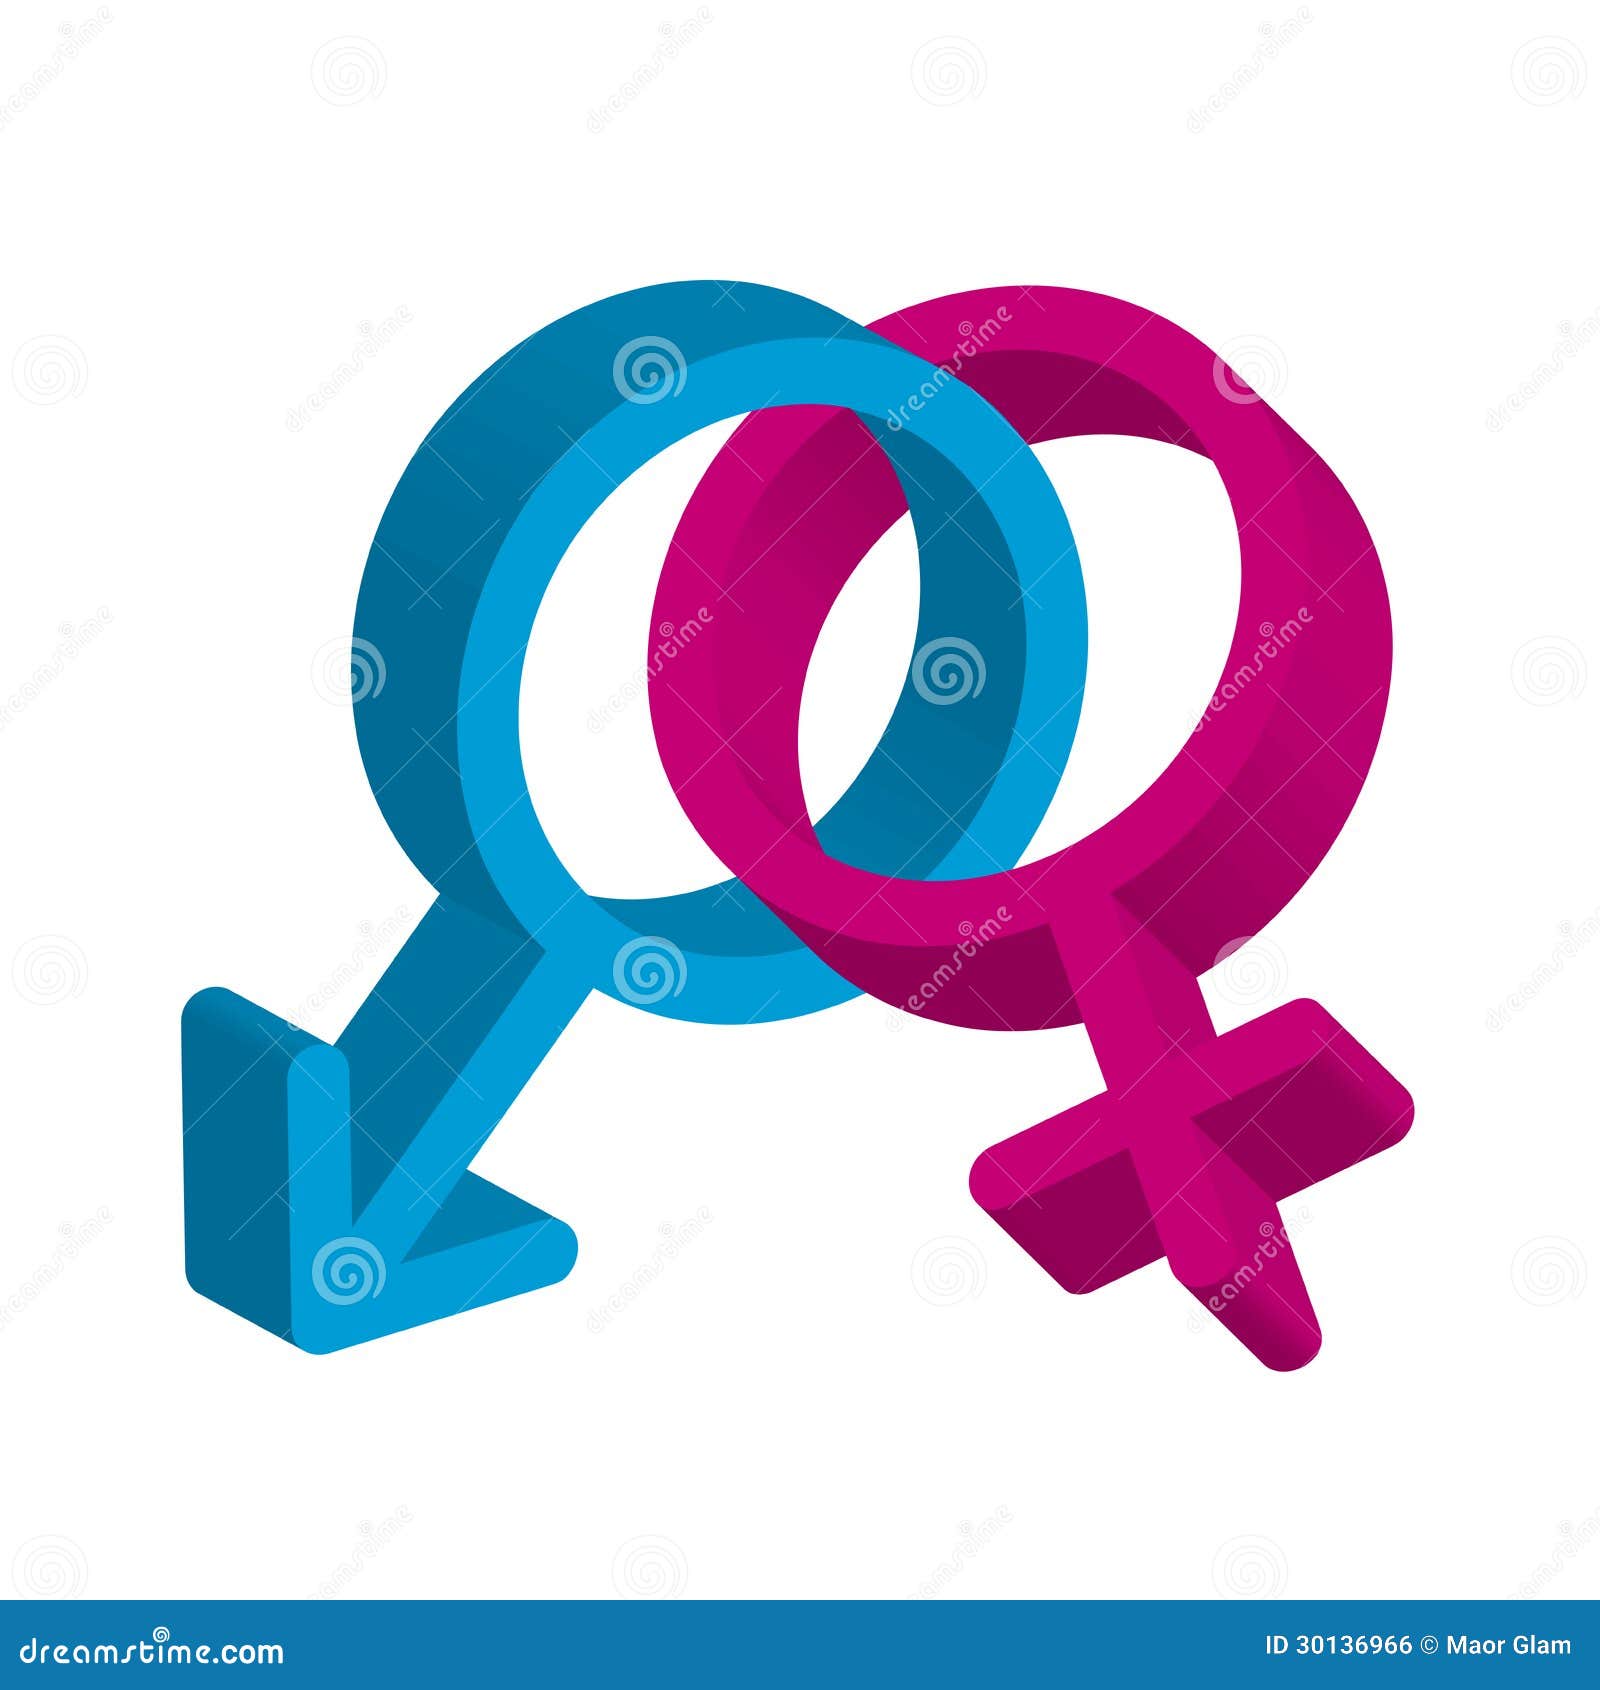 Male And Female Symbol Royalty Free Stock Image Image 30136966